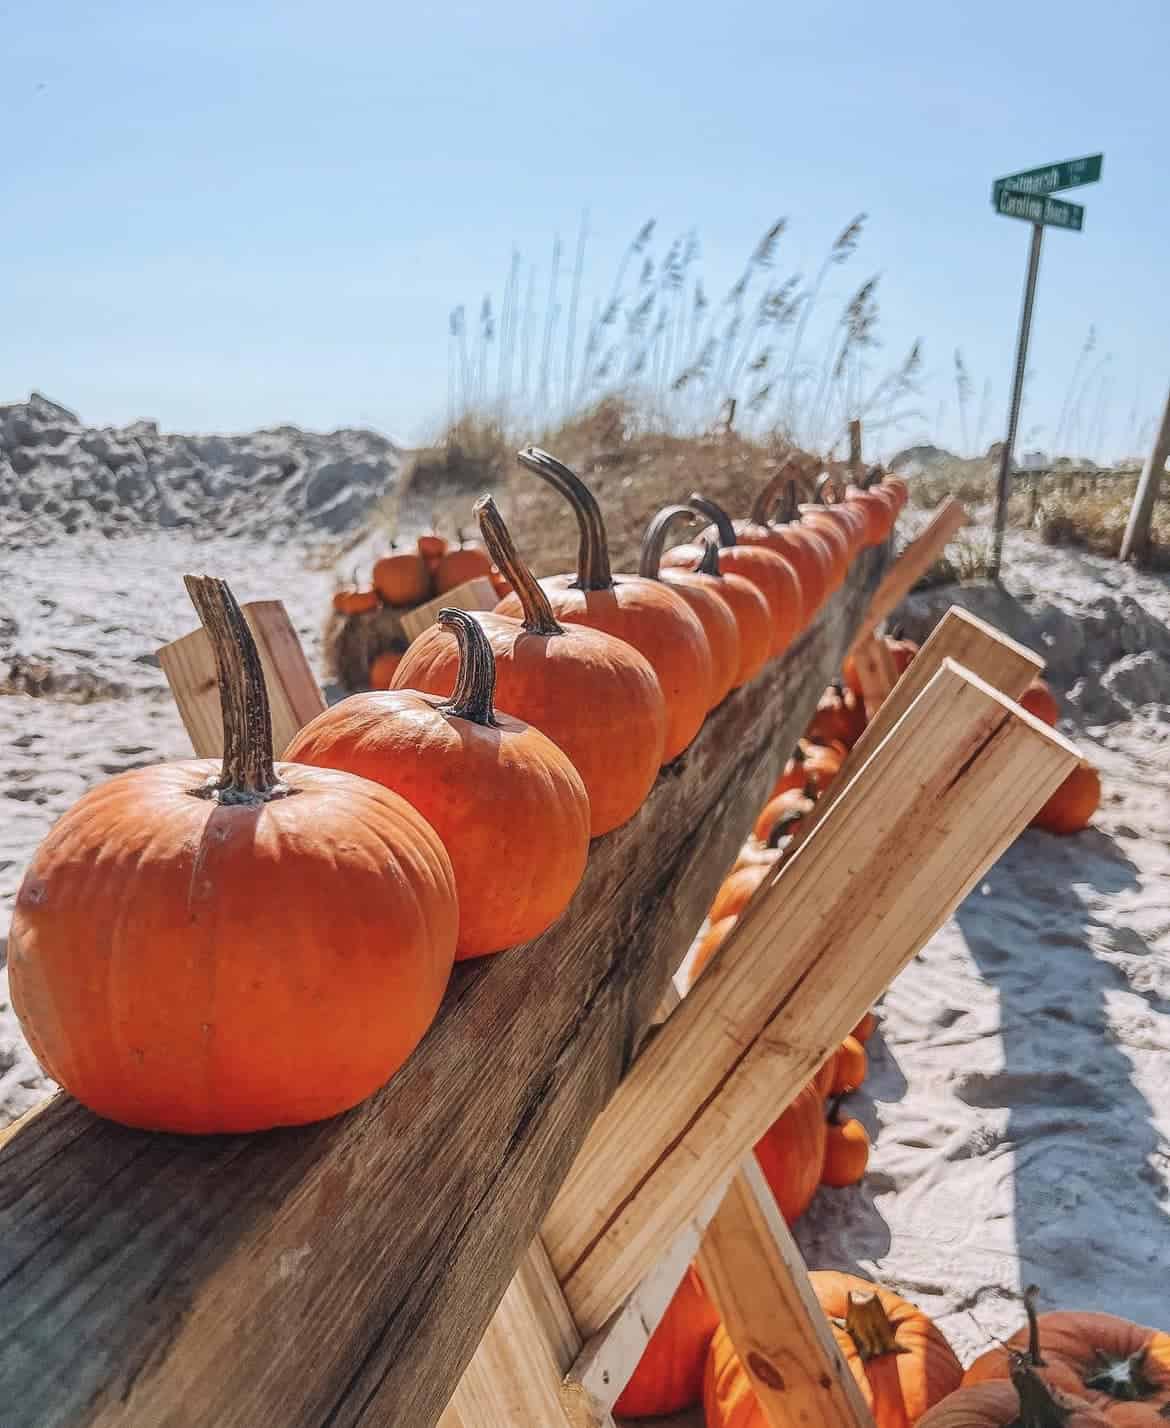 Pumpkins on the beach in Carolina Beach North Carolina - The Sunrise Shack - Vacation Rental Property in Carolina Beach